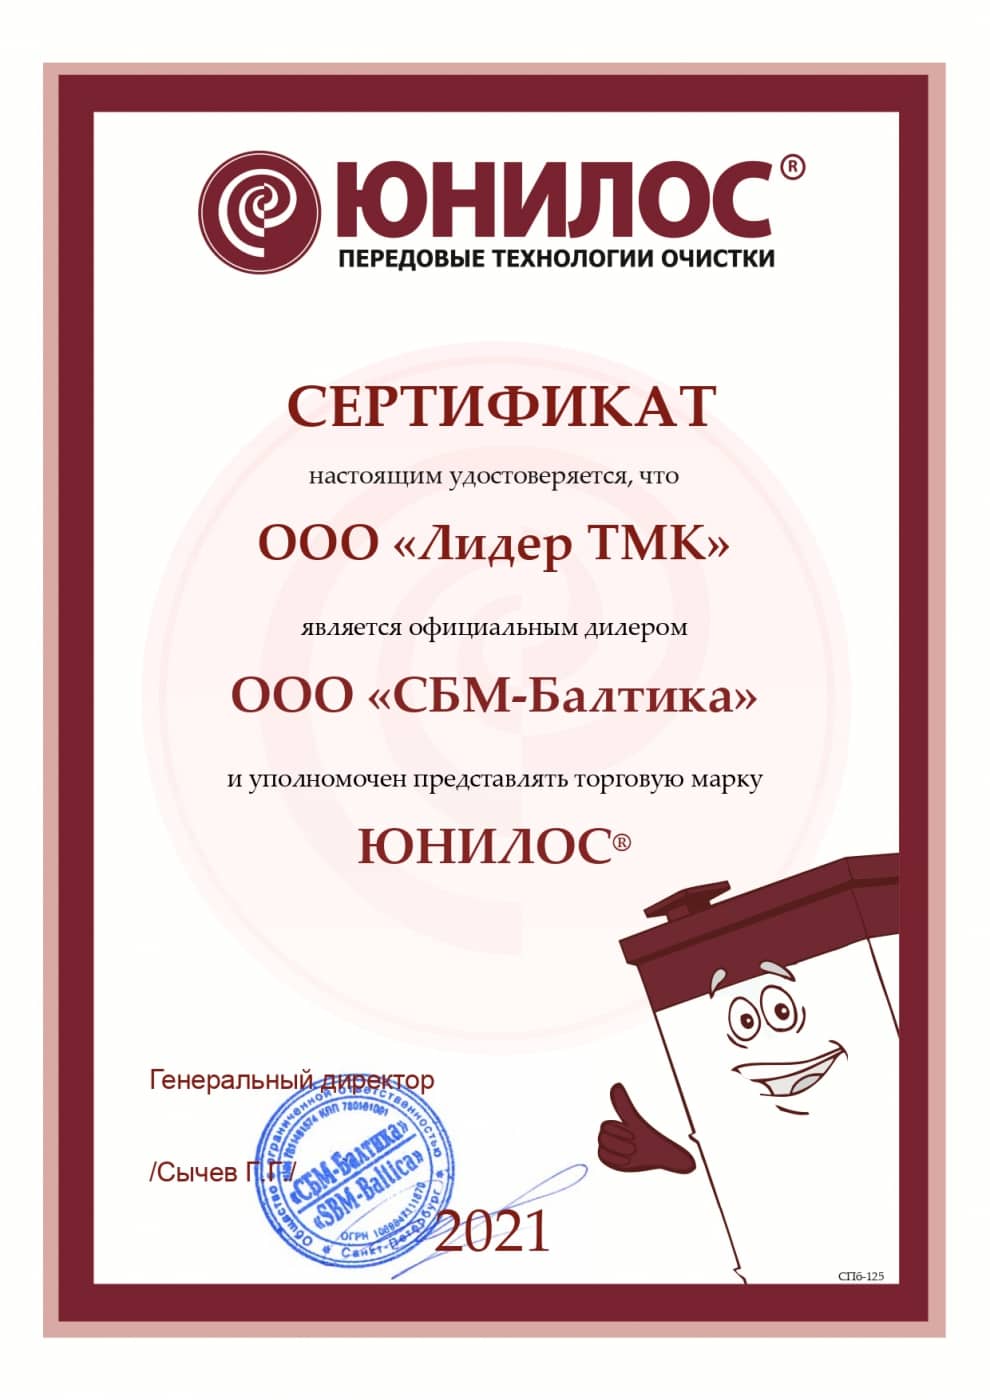 Септик Астра ДАБЛ 6 прин. сертификат